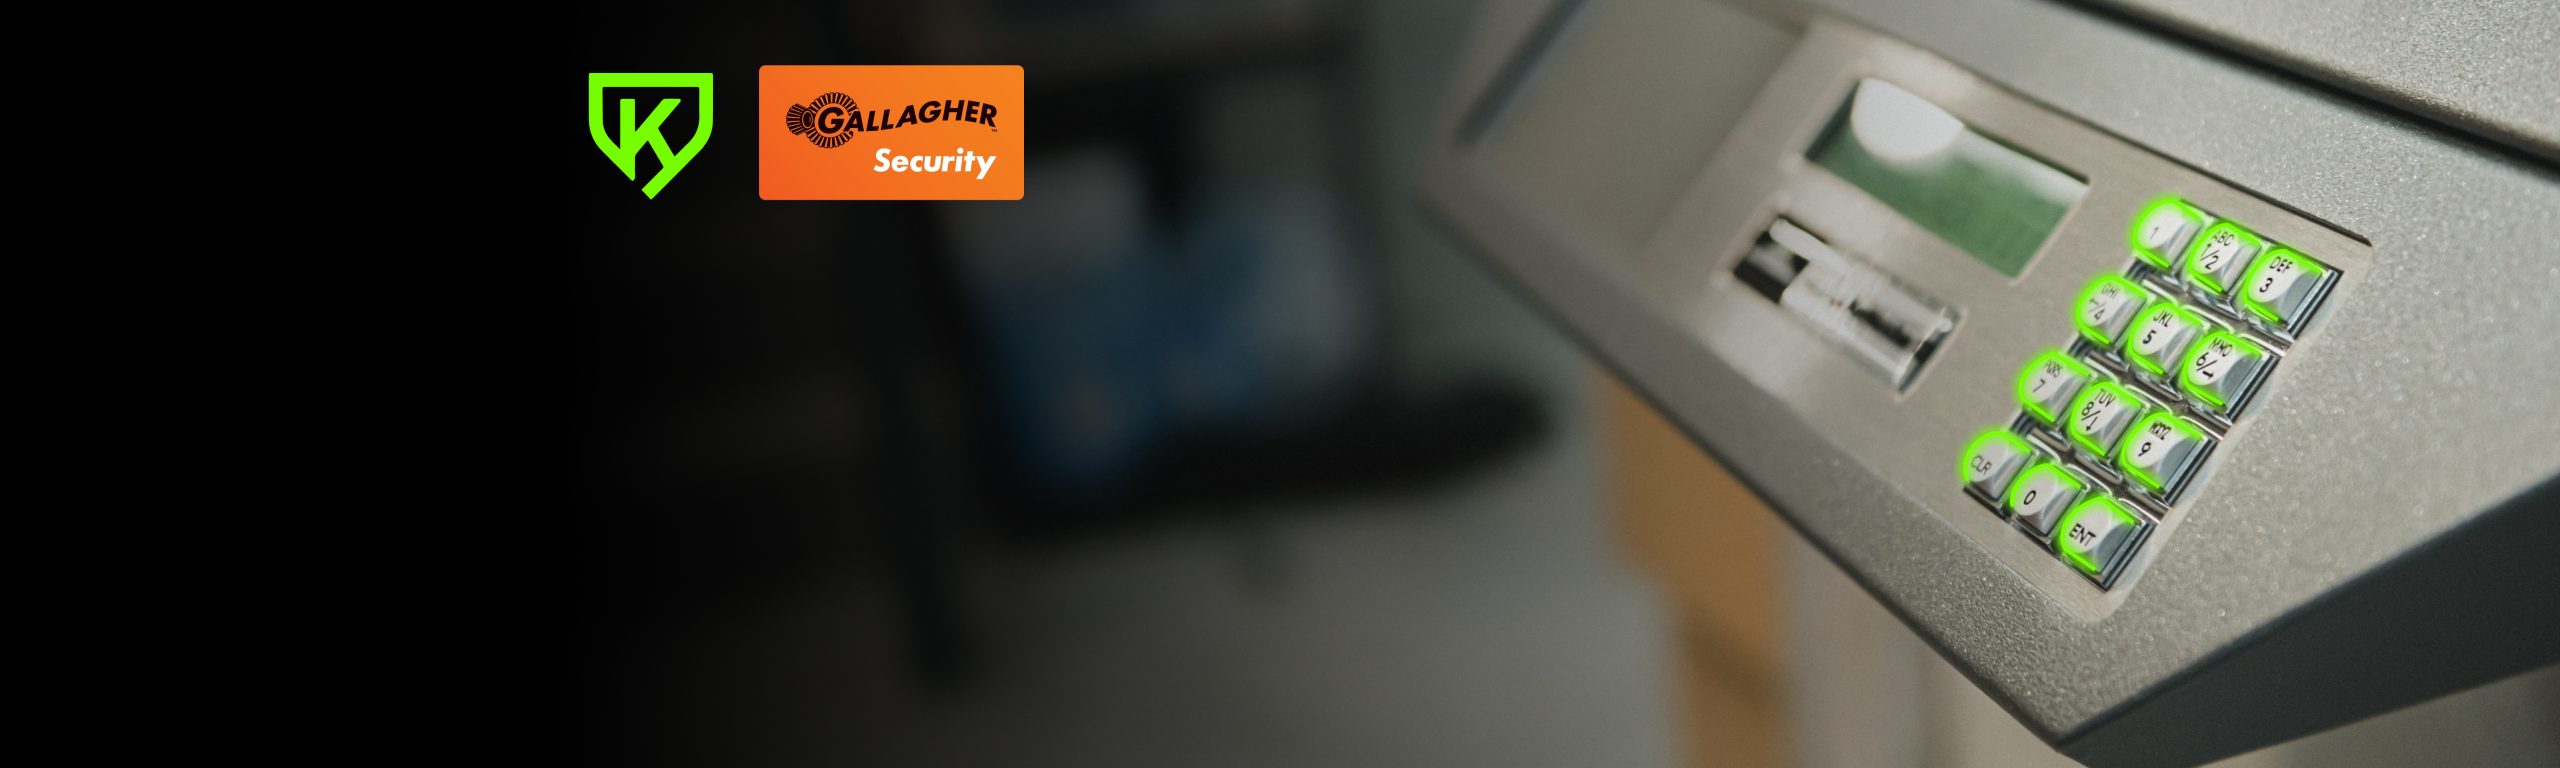 Revolutionising Key Security: KeyWatcher Australia Joins Gallagher Security’s Technology Partner Program